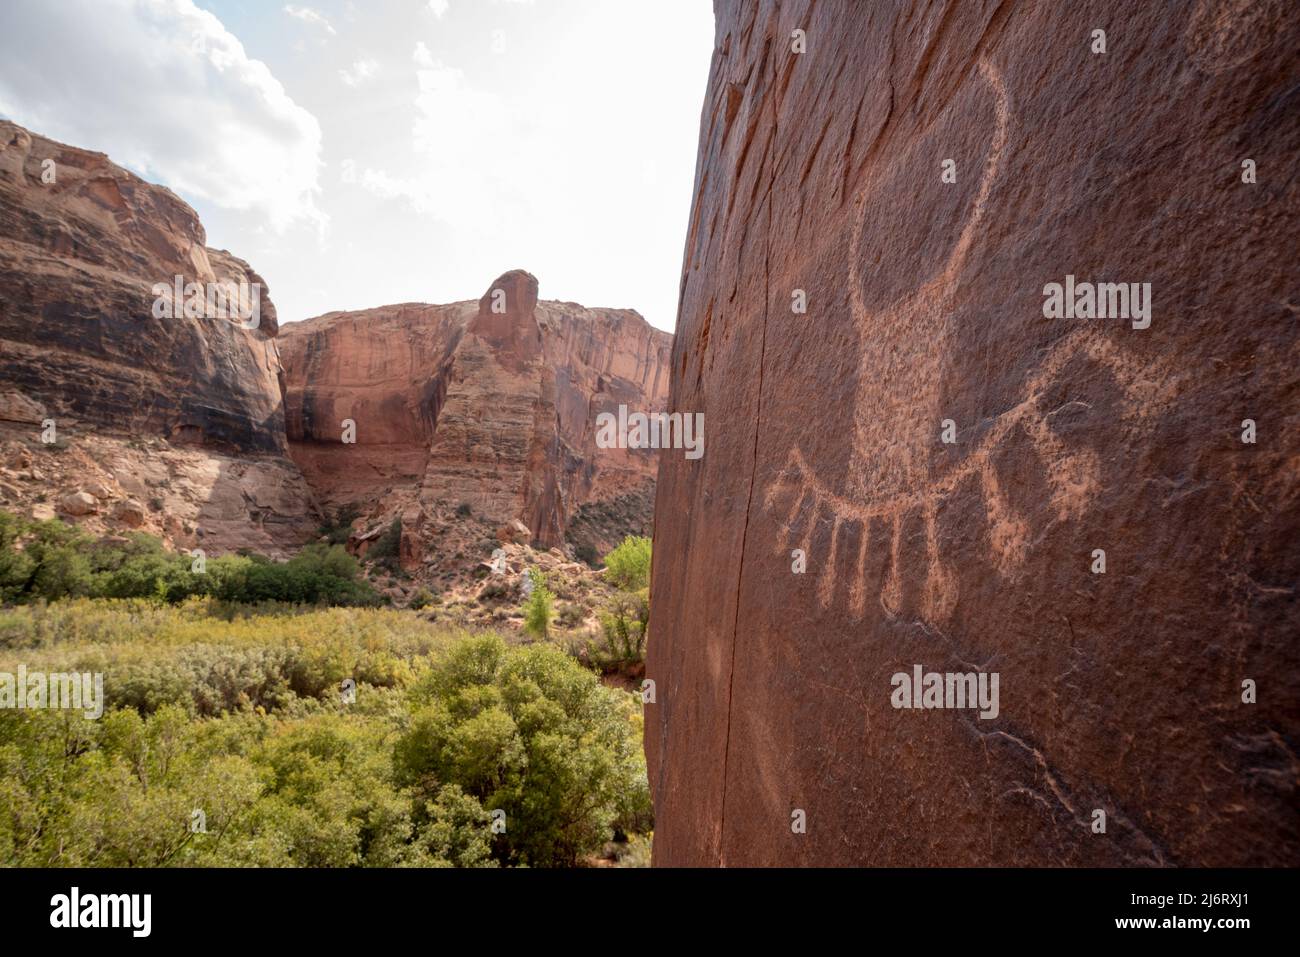 Native American petroglyphs, Southern Utah. Stock Photo